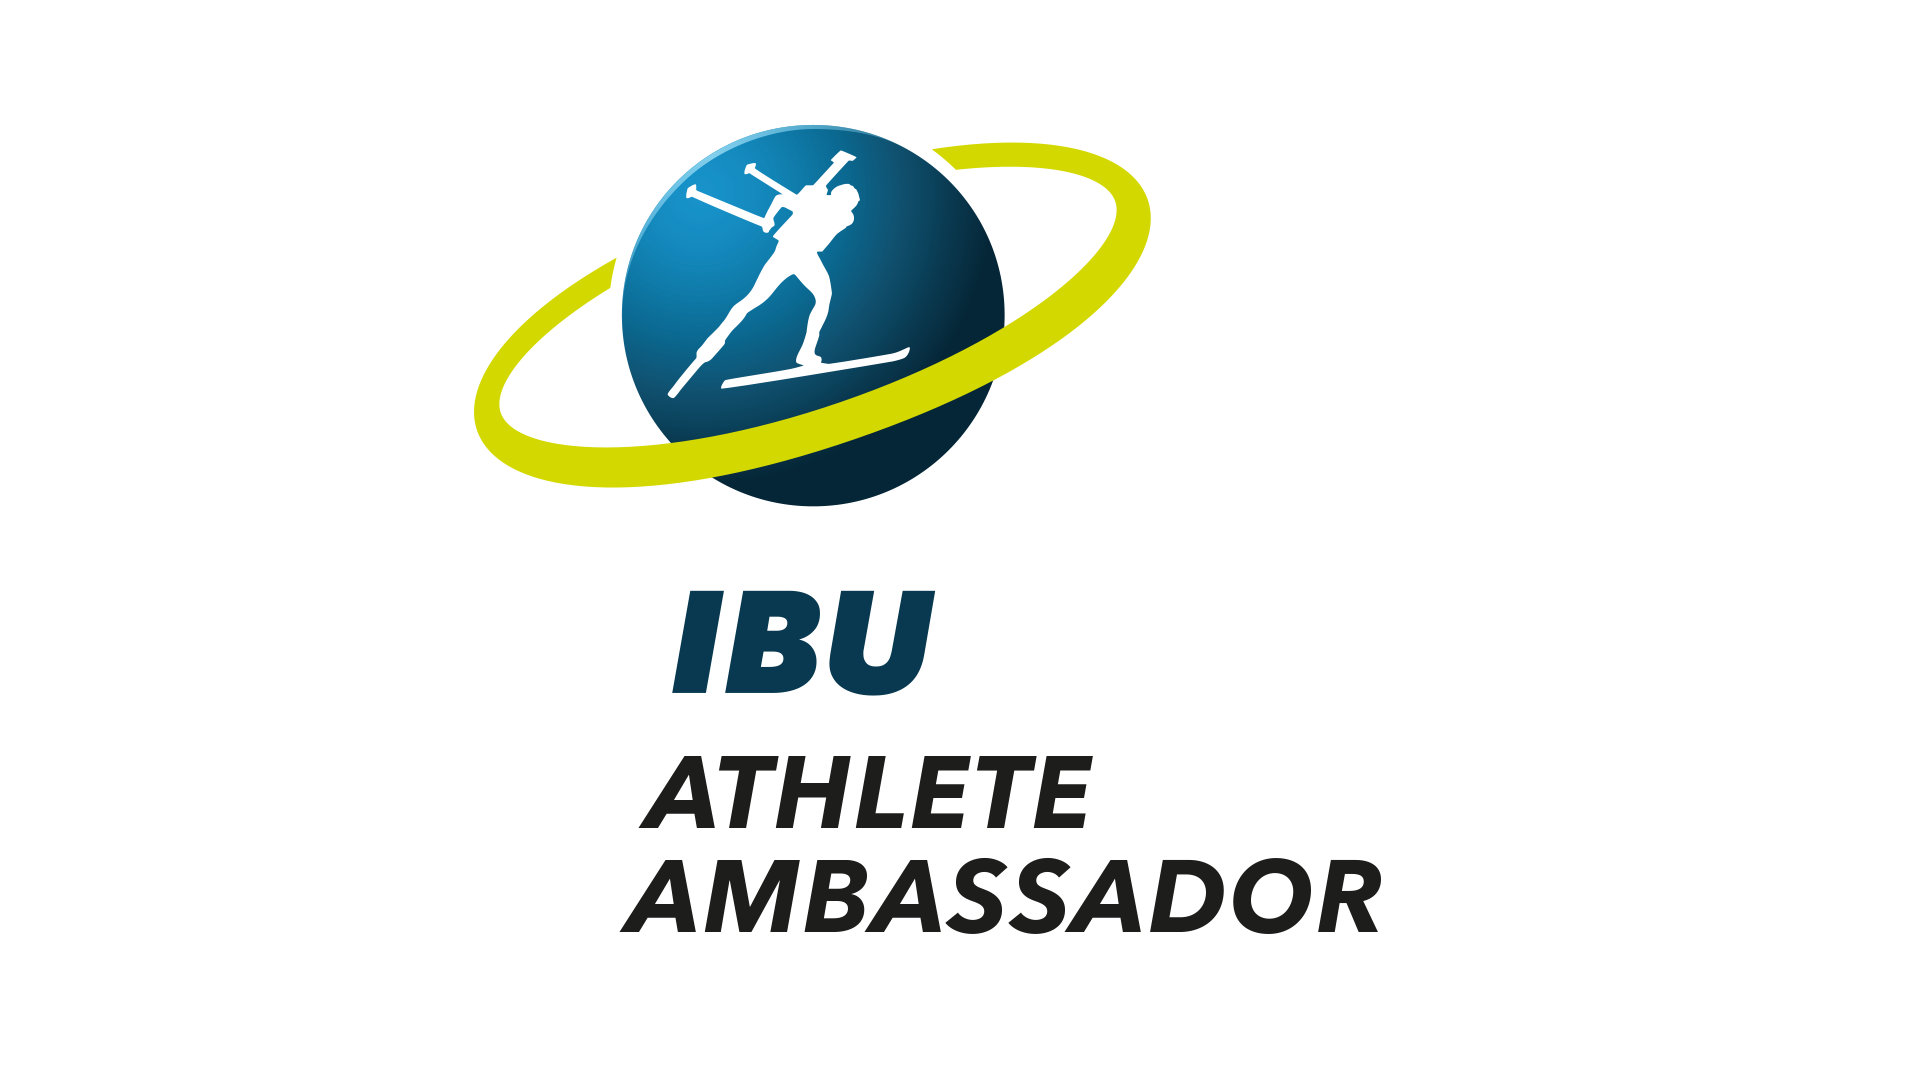 Young Xxx Com Mp4 Dawnlod 4 5 Min - BIU Athlete Ambassadors begin terms to protect the integrity of Biathlon â€“  Biathlon Integrity Unit